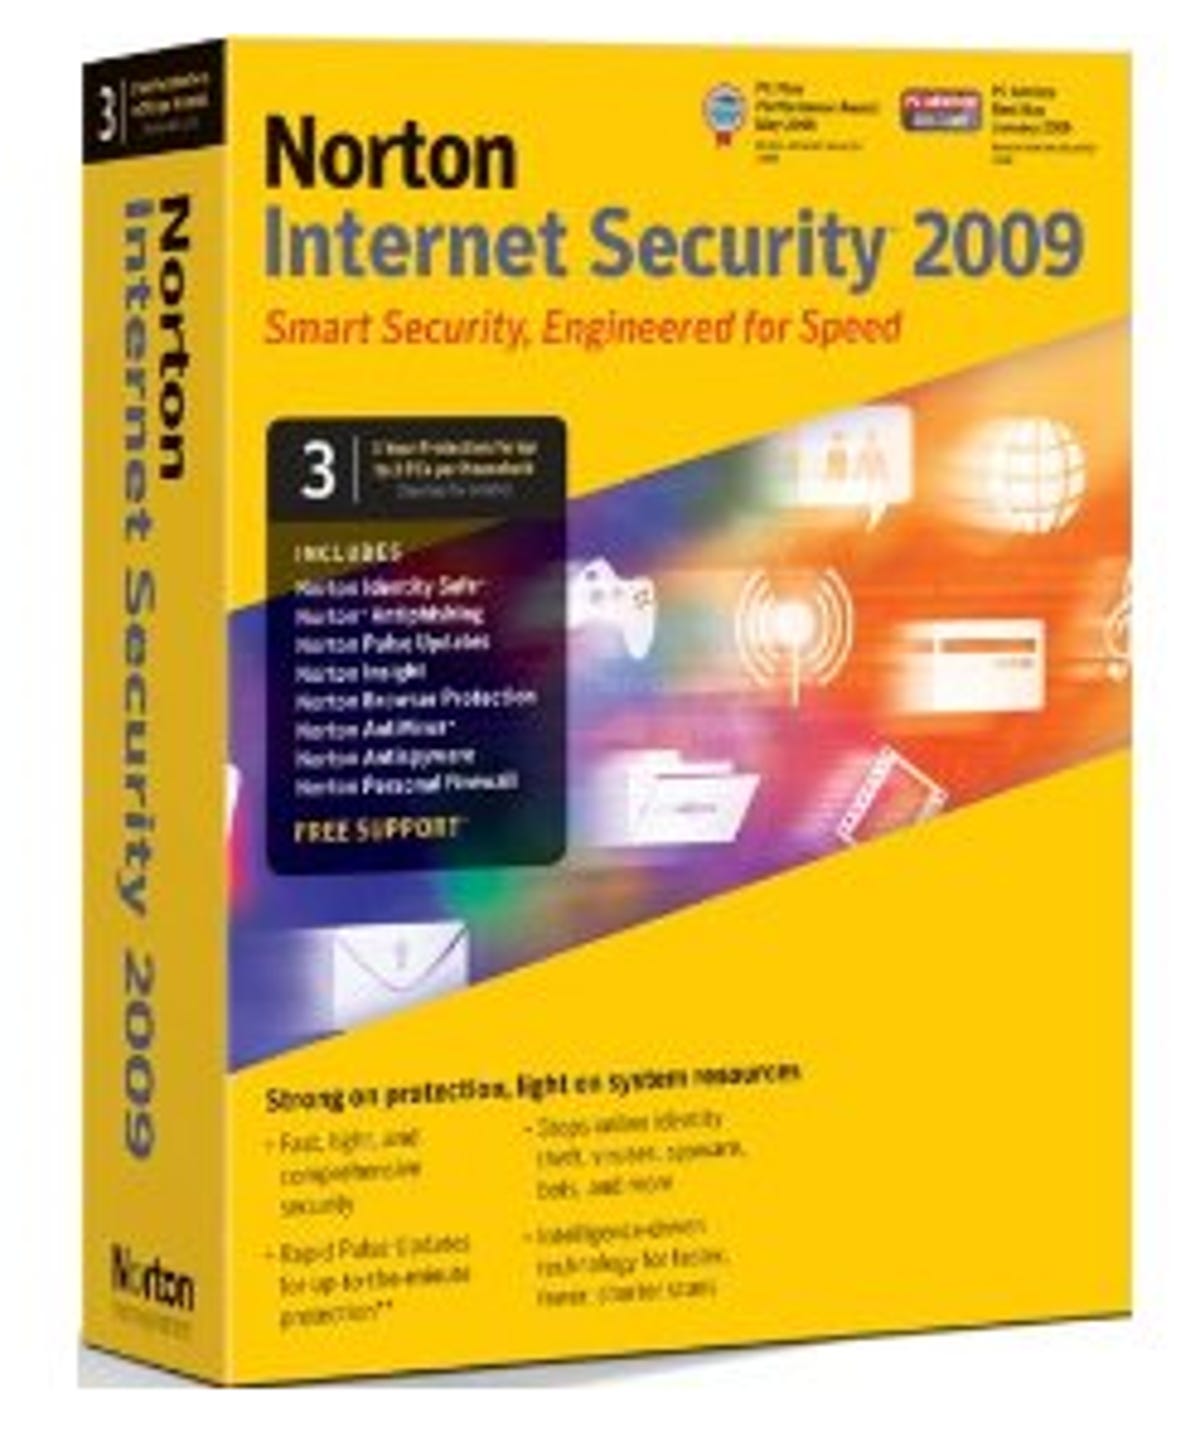 NortonInternetSecurity_2009.png